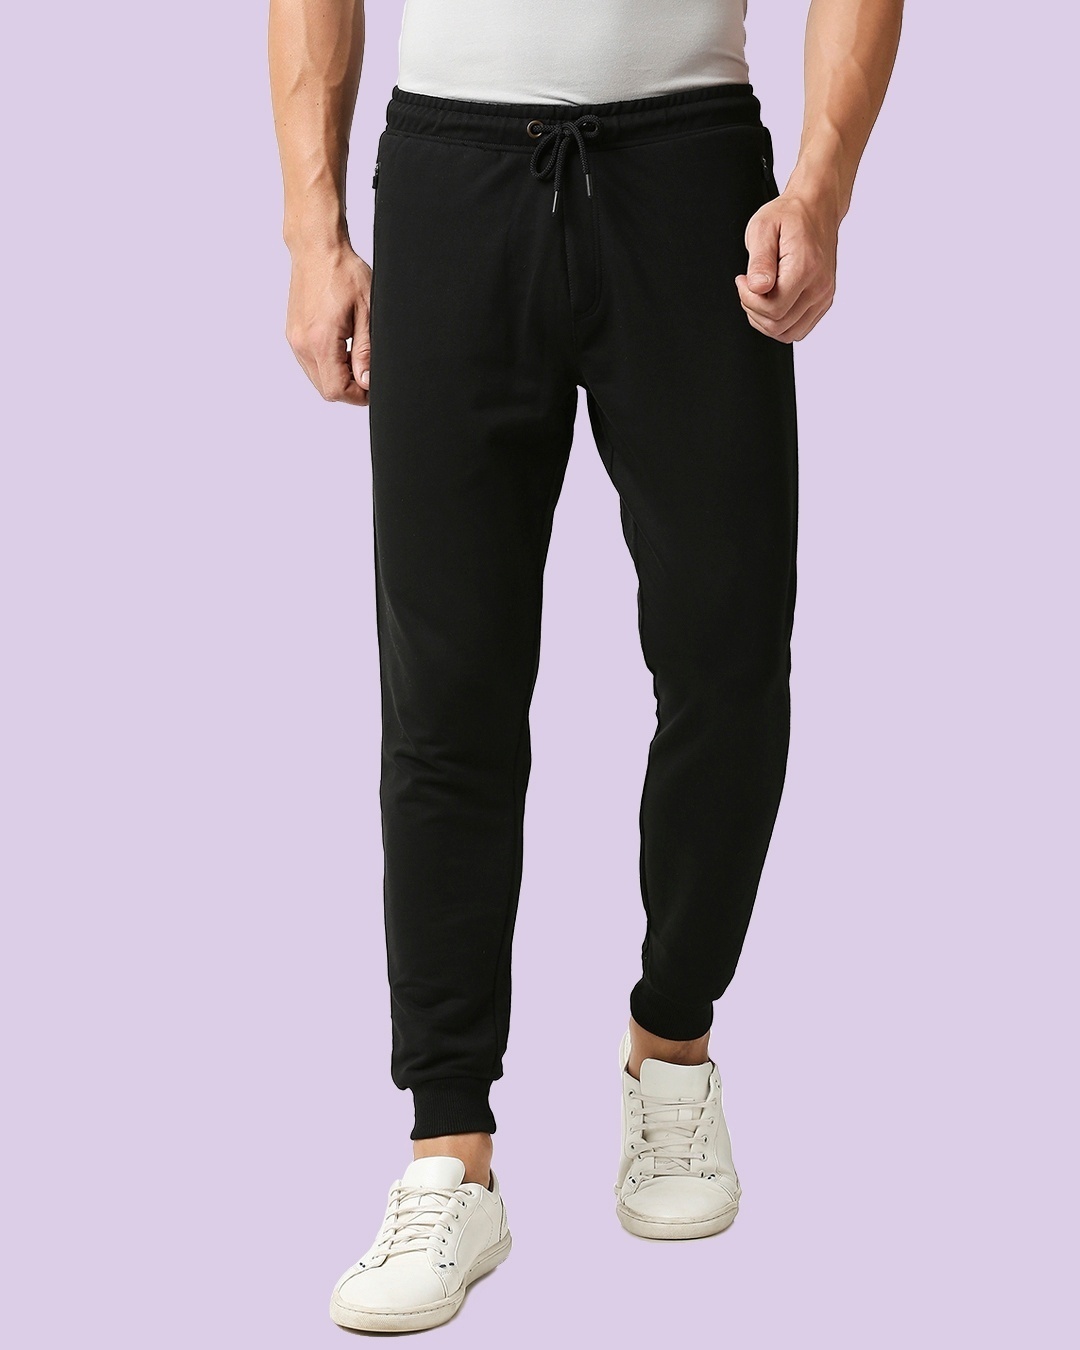 Shop Jet Black Casual Jogger Pants With Zipper-Front